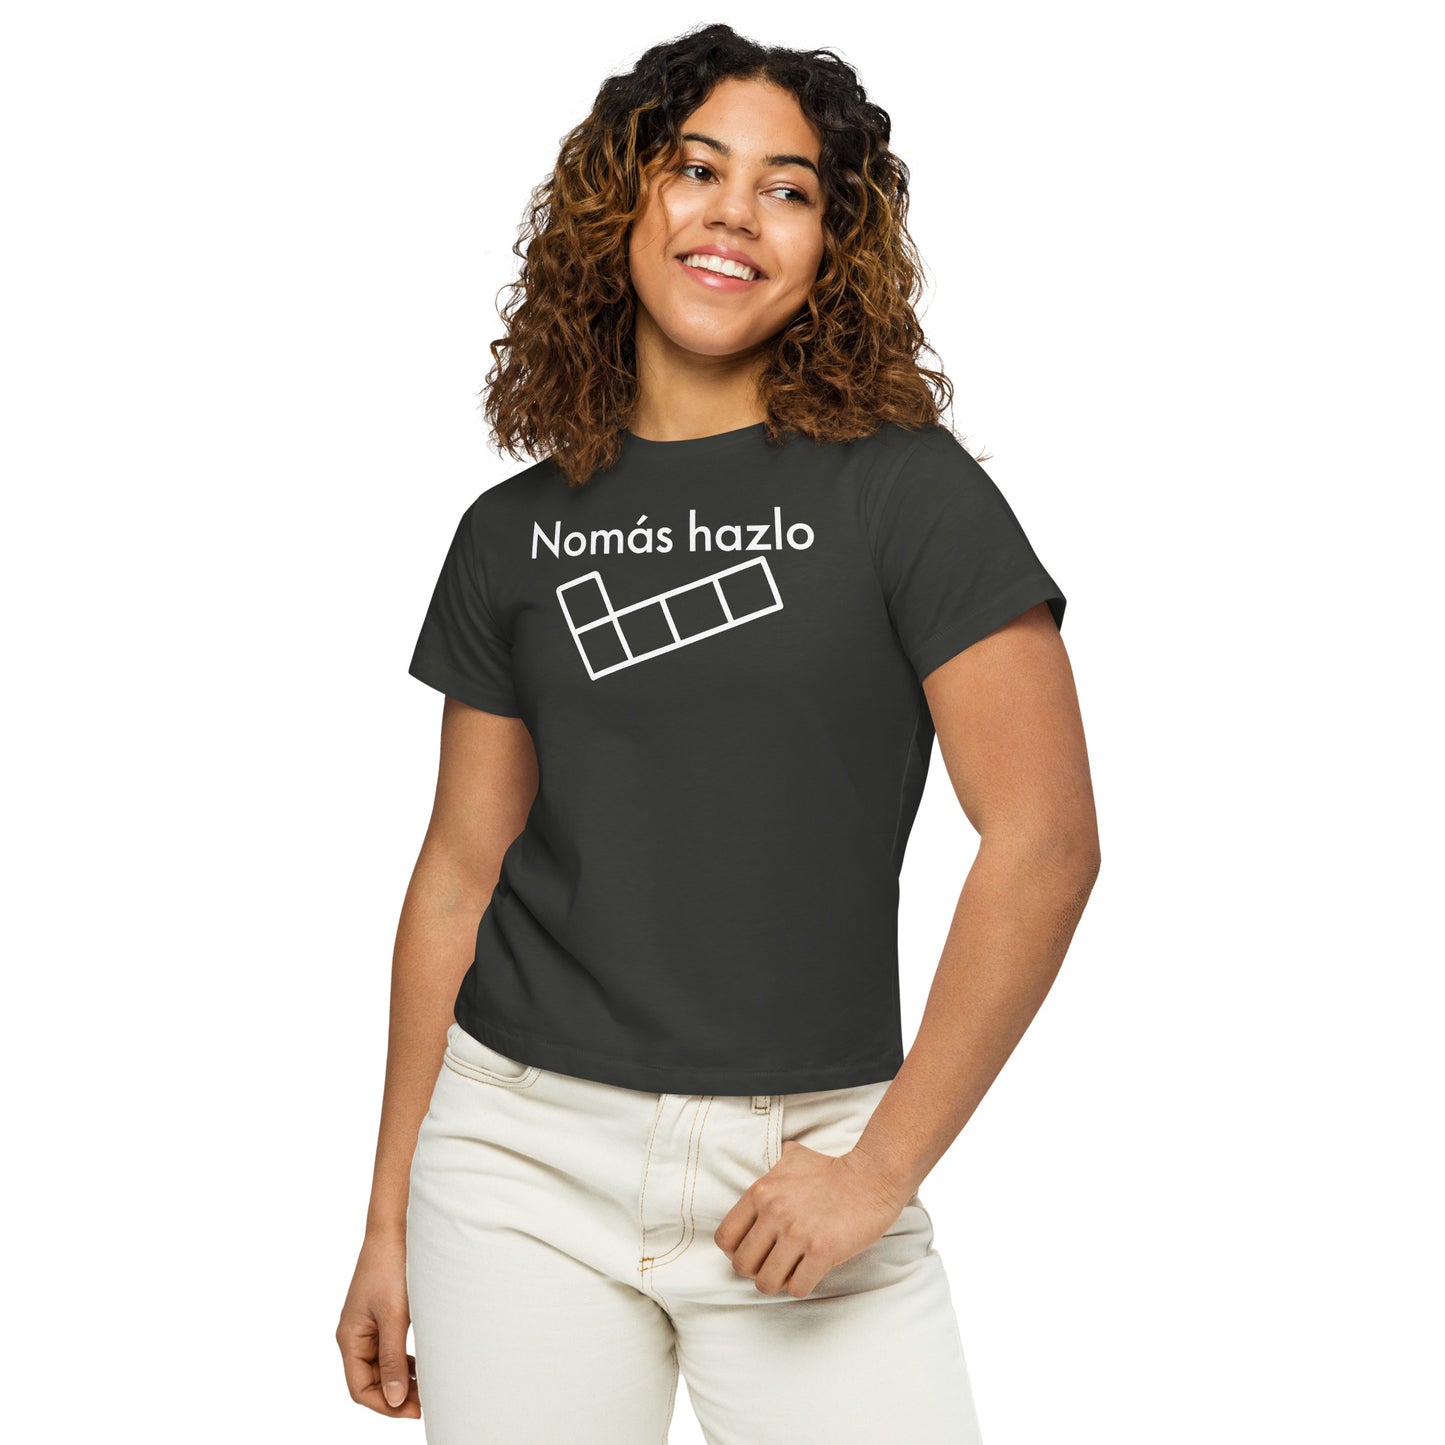 T-shirt for women "Just do it"